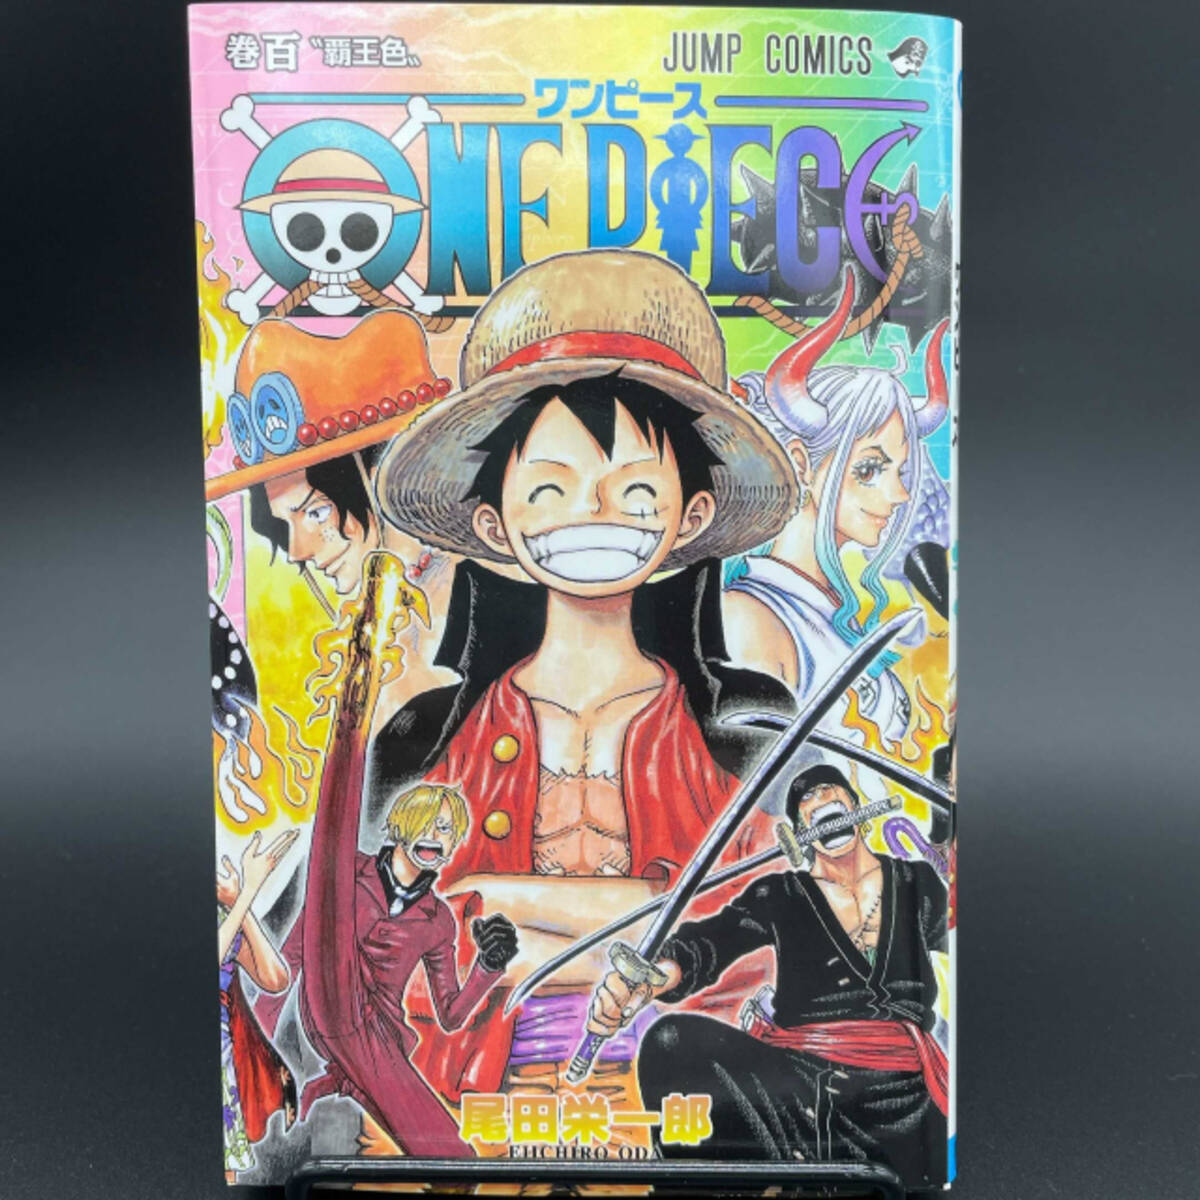 One Piece ヤマトが 10人目の仲間 で確定 ニオわせの数々に期待の声 21年9月8日 エキサイトニュース 2 2